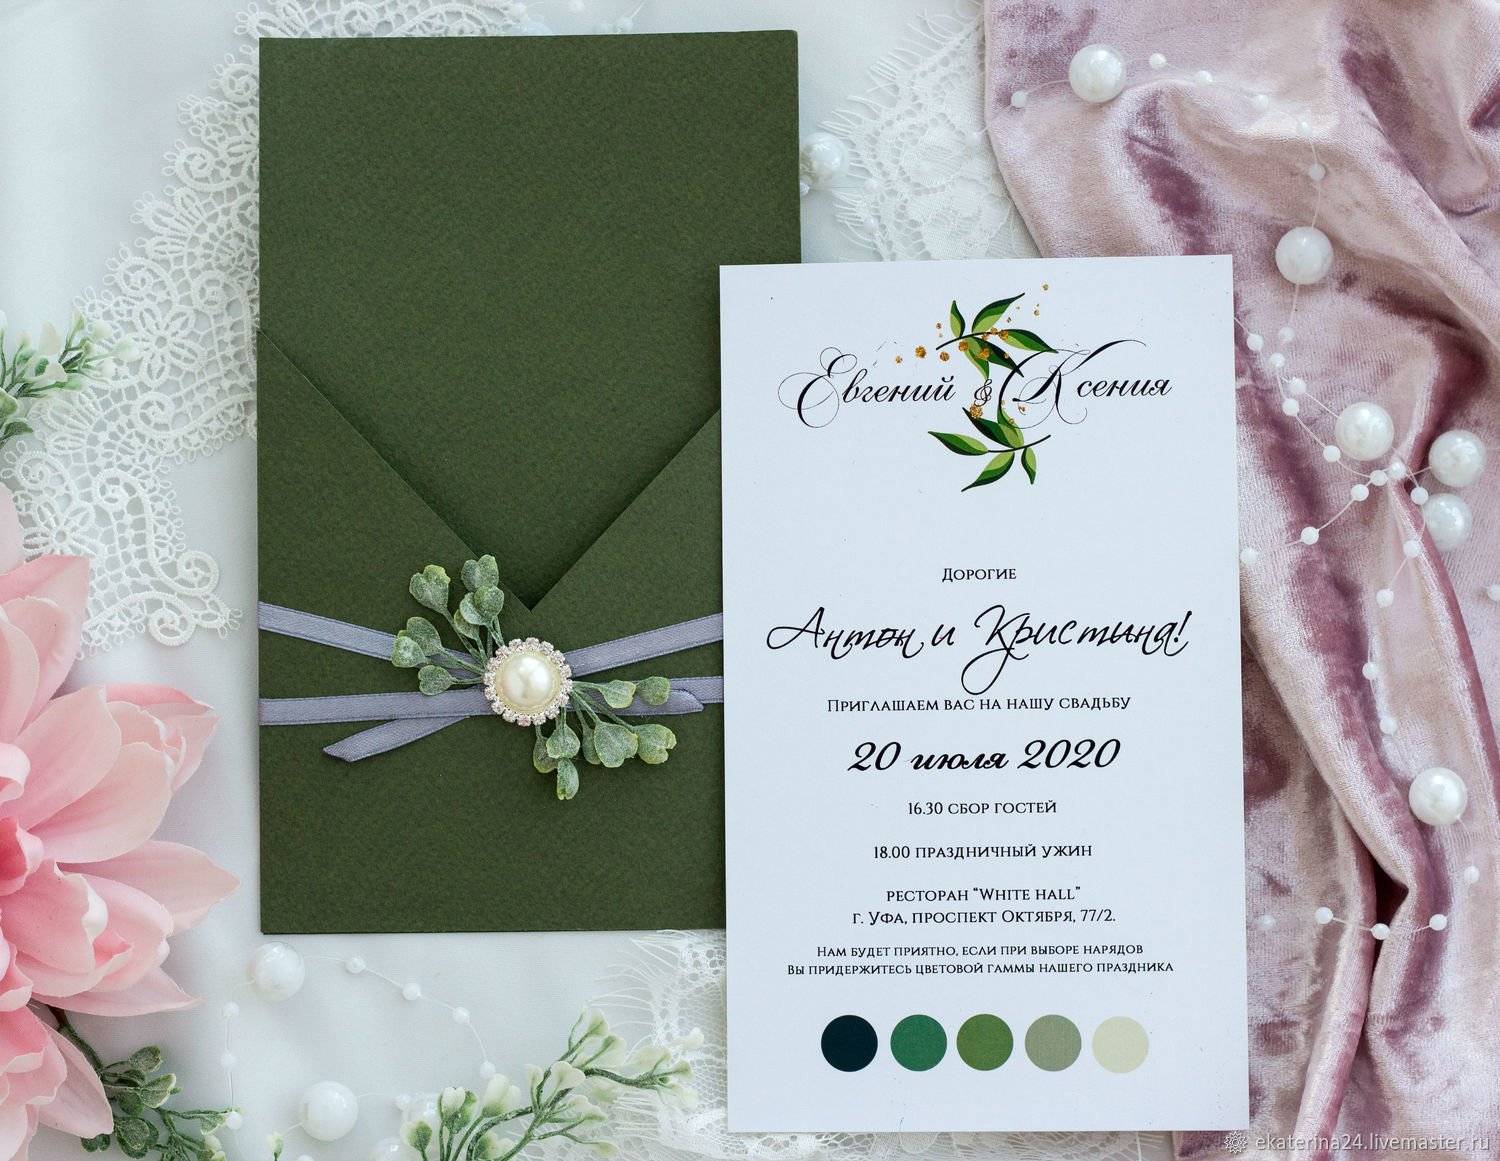 Свадьба в зеленом цвете: символическое начало